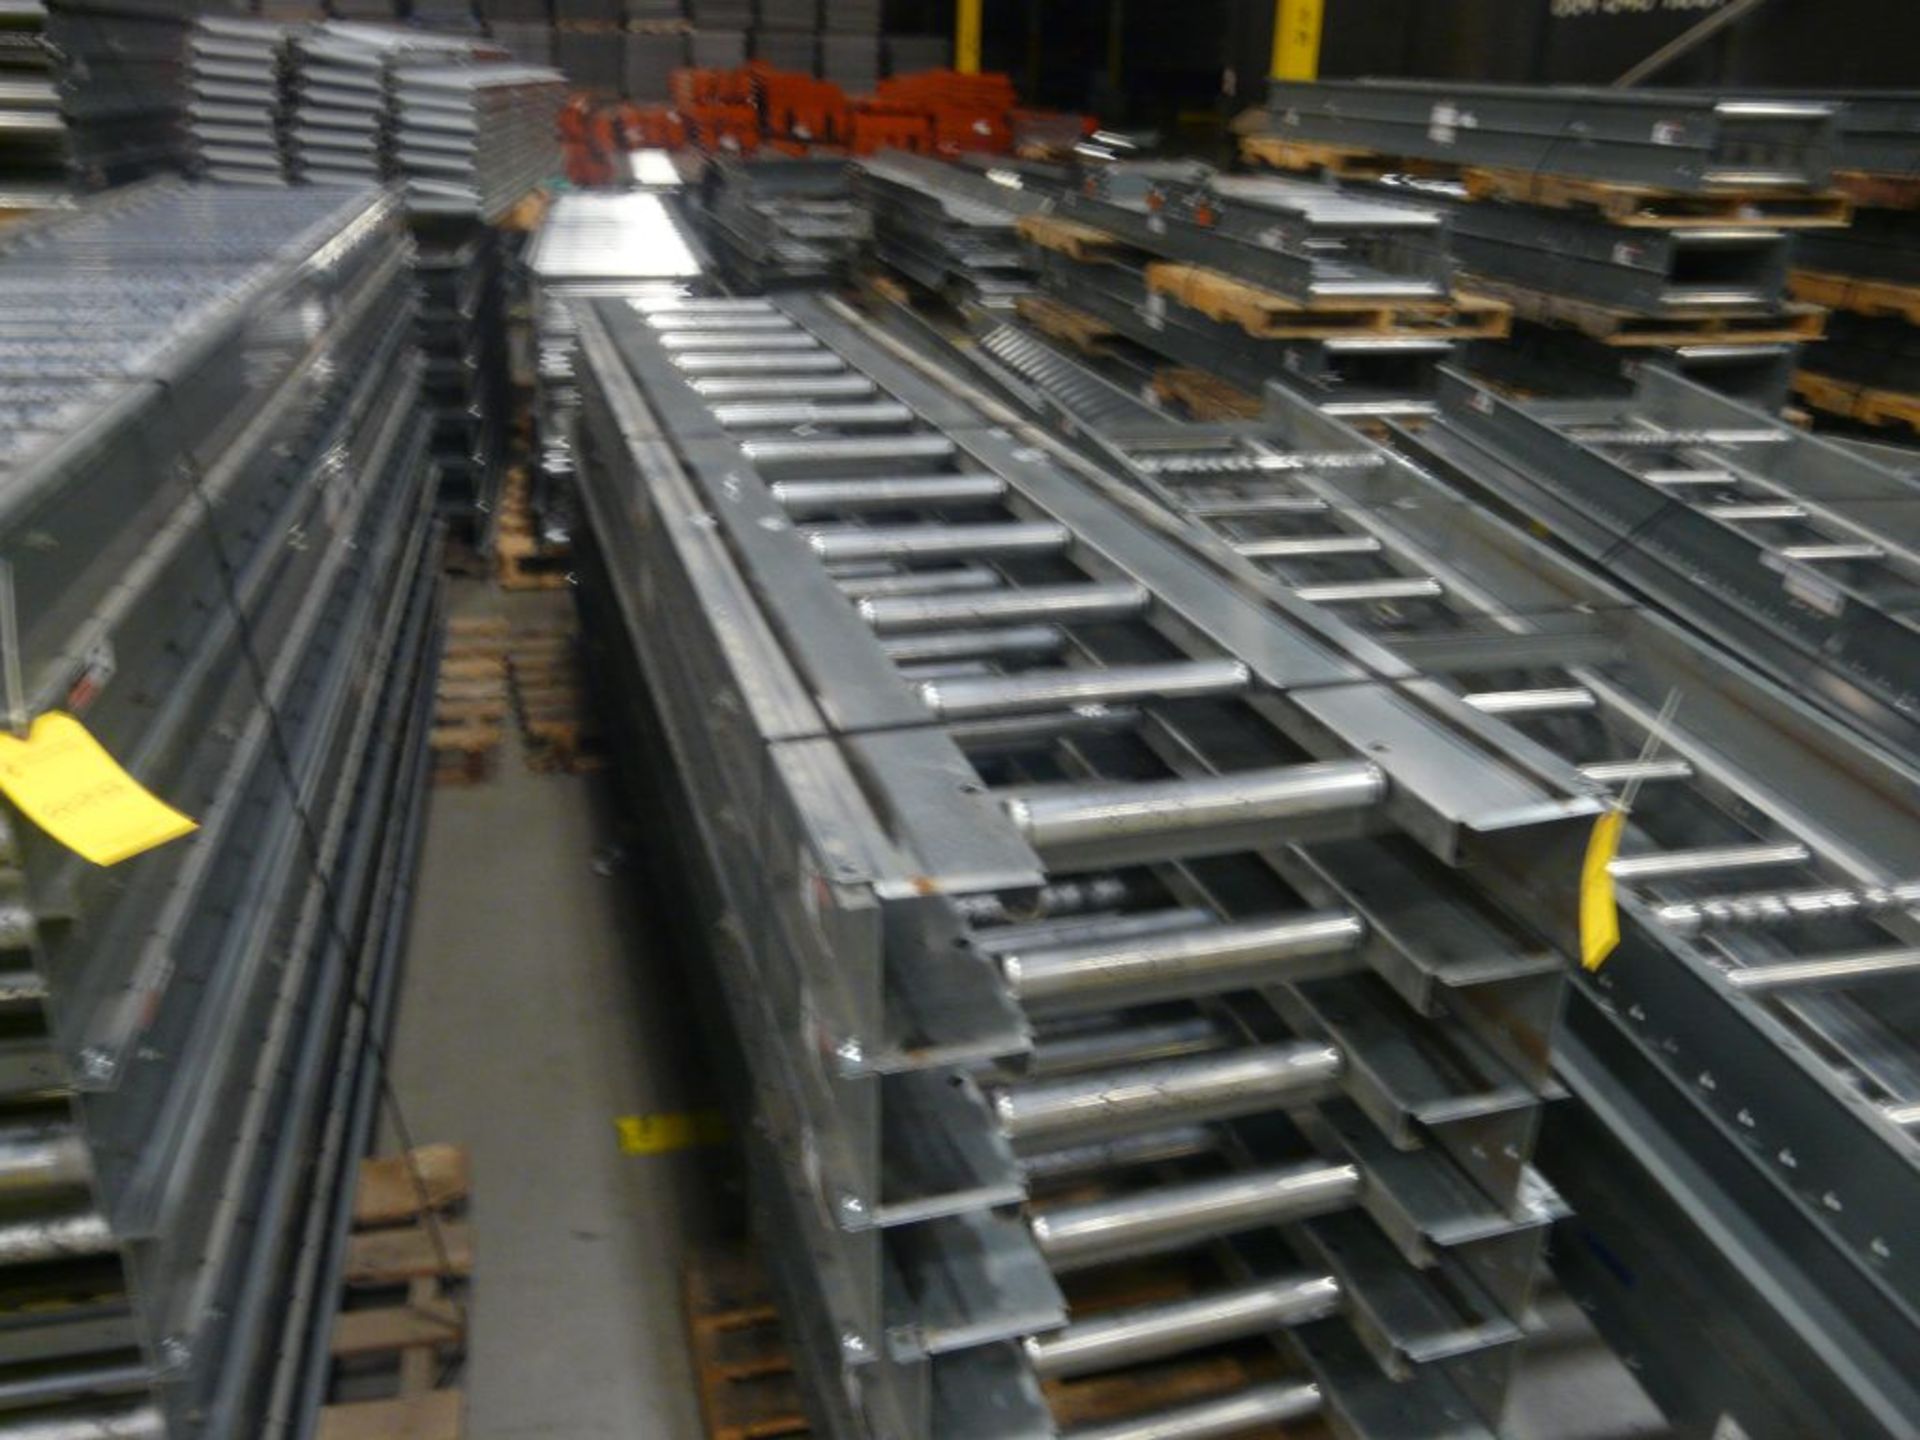 Lot of (45) 200 Belt Intermediate Conveyors - 12'L x 28"W; Tag: 223712 - $30 Lot Loading Fee - Image 3 of 4